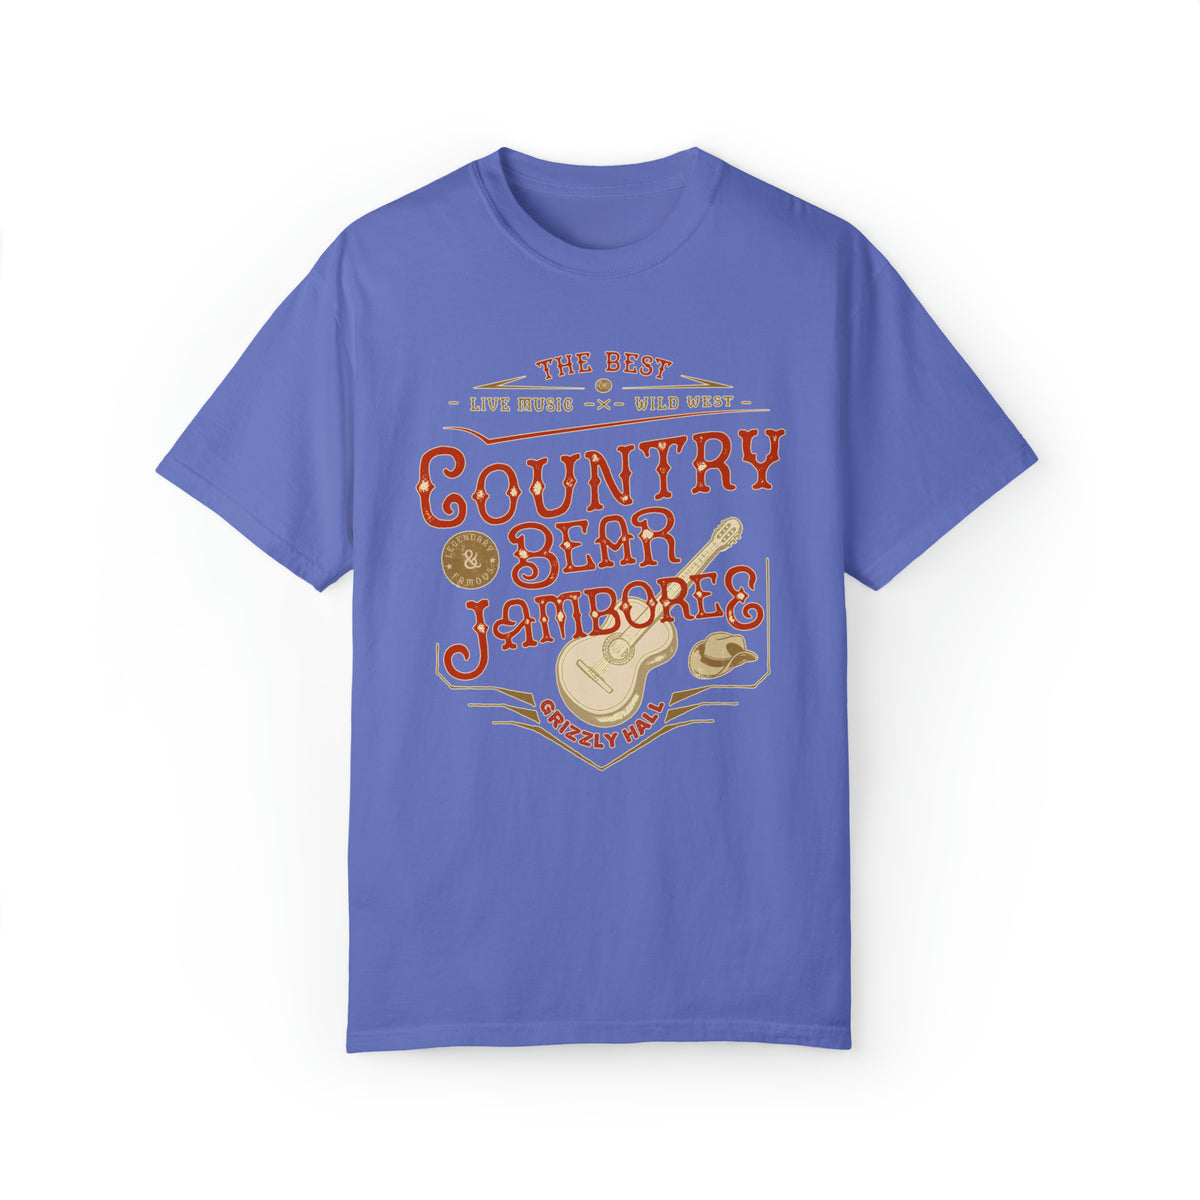 Country Bear Jamboree Comfort Colors Unisex Garment-Dyed T-shirt